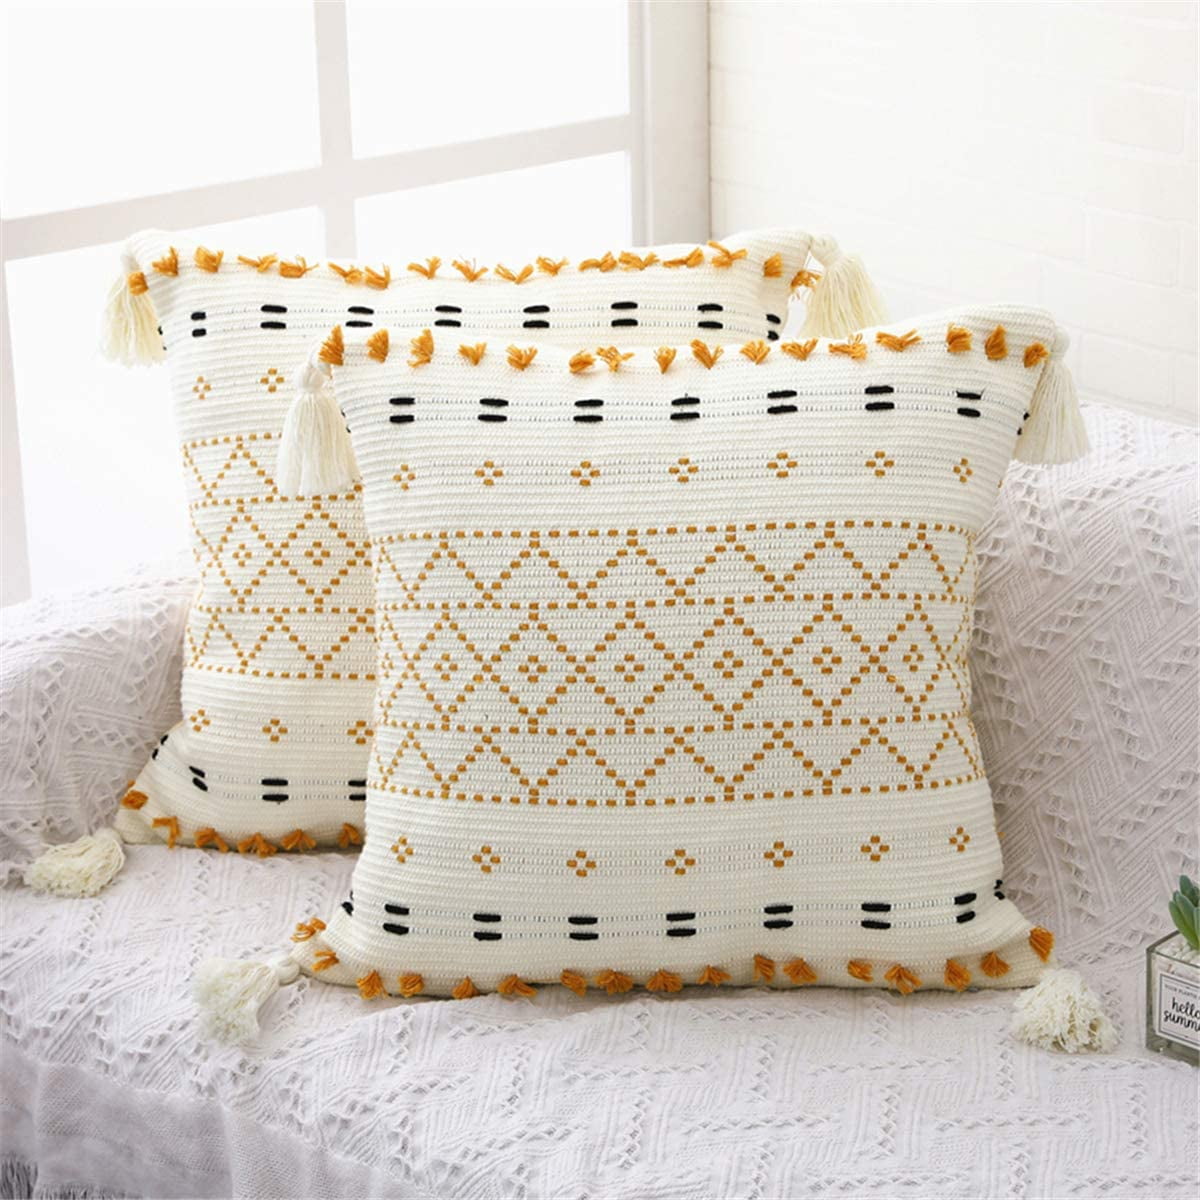 20x20,vintage pillow,kilim pillow,bohemian pillow,home living,home decor,decorative pillow,handwoven pillow,throw pillow,accent pillow